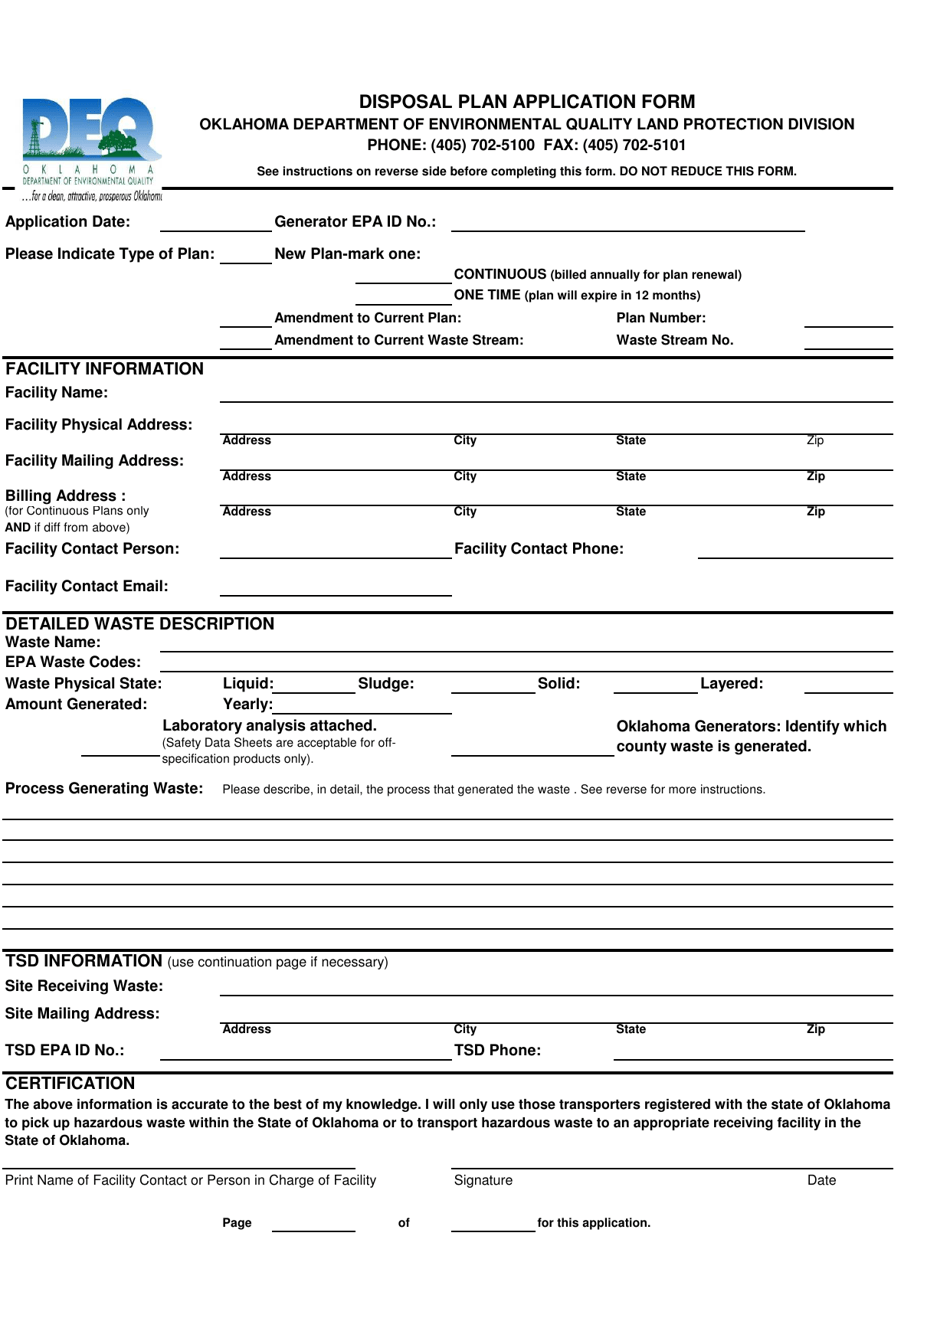 Disposal Plan Application Form - Oklahoma, Page 1